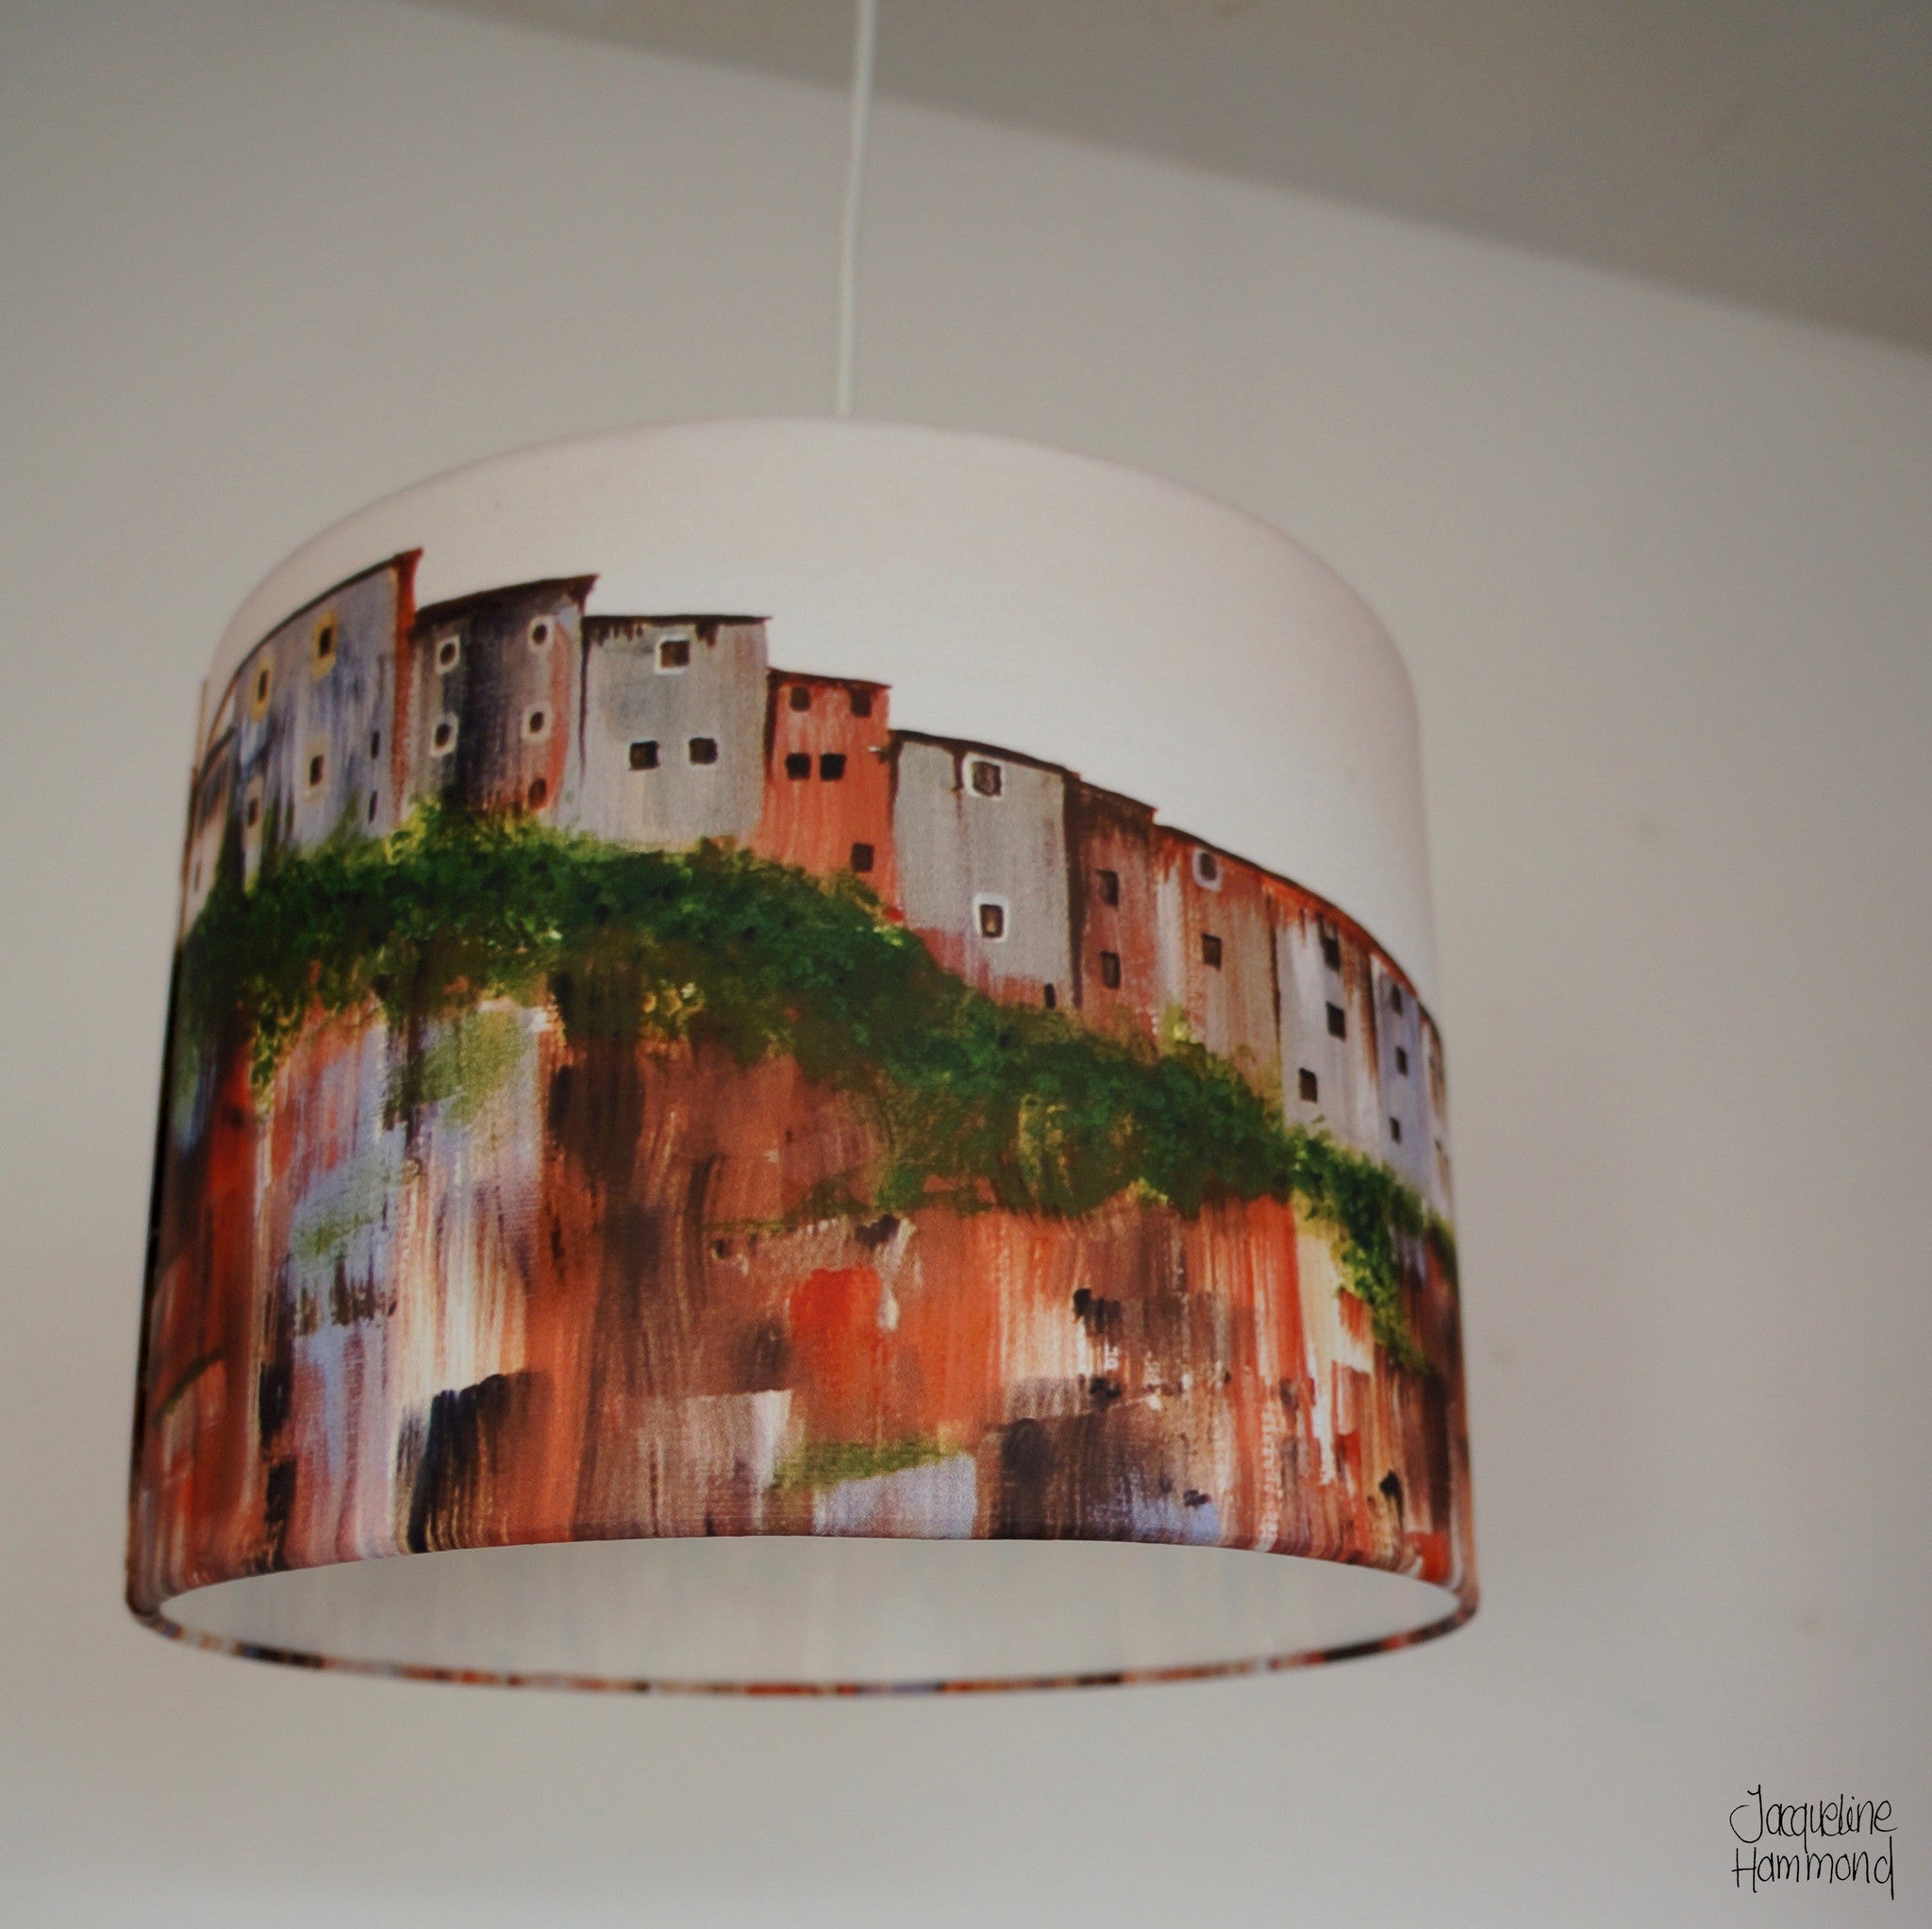 Lamp Shade - Castelfolit De La Roca  Smart Deco Homeware Lighting and Art by Jacqueline hammond